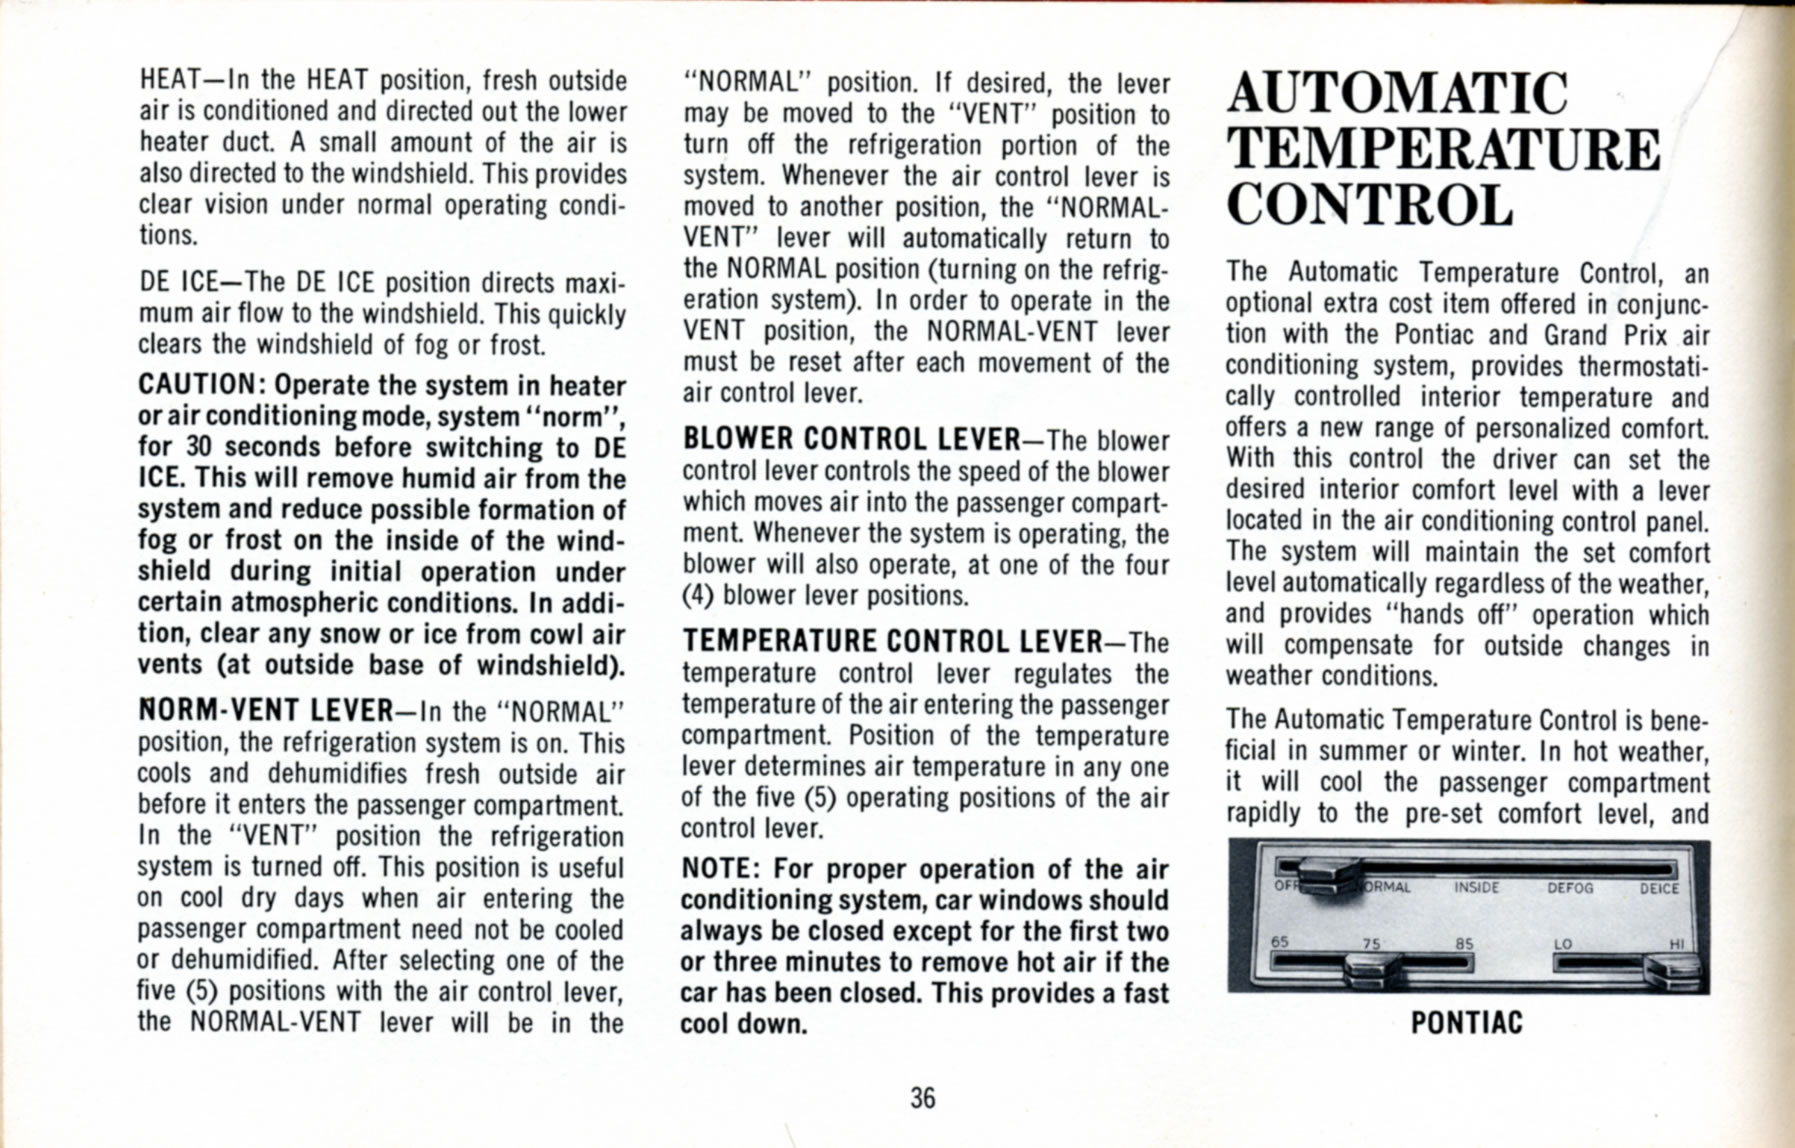 1969 Pontiac Owners Manual-36